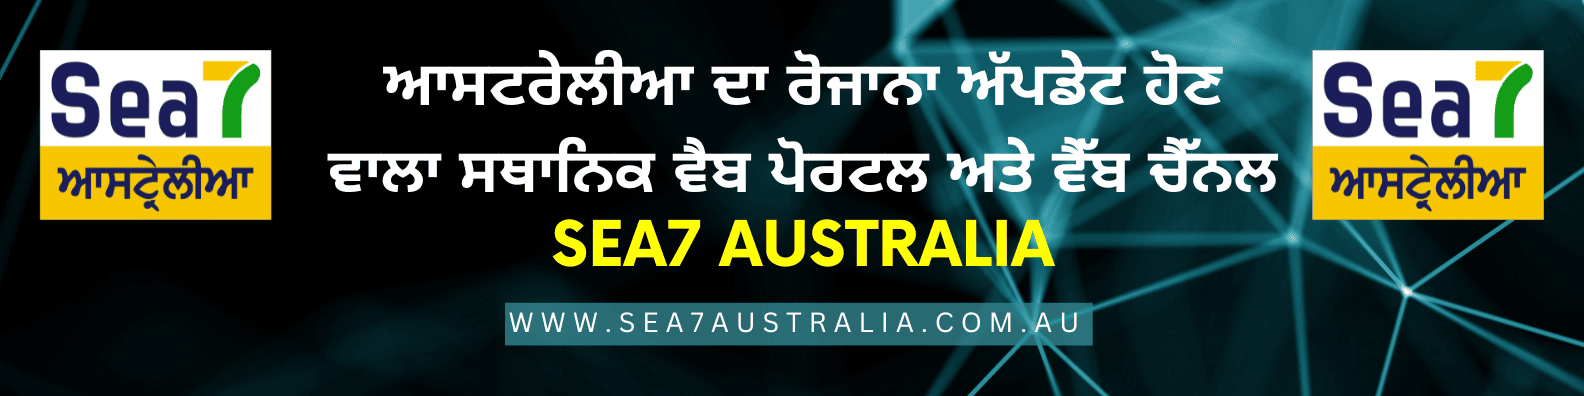 latest live Punjabi news in Australia